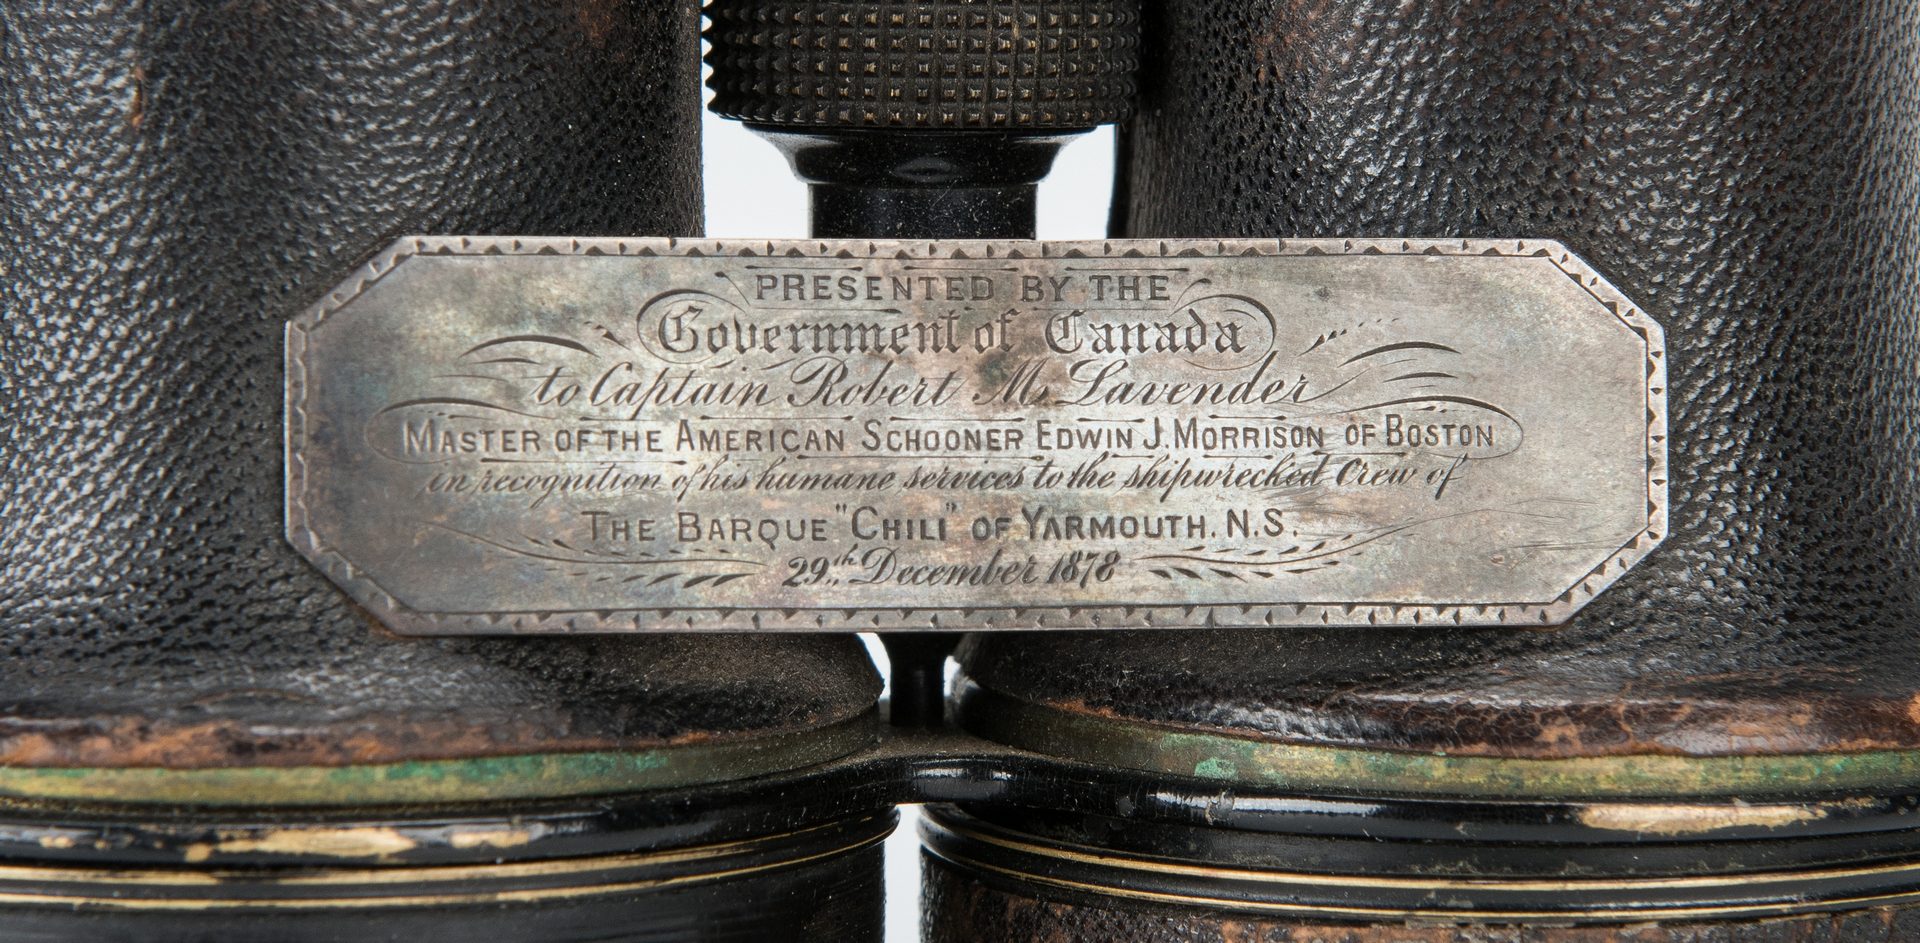 Lot 399: Binoculars Awarded to Captain Robert M. Lavender, Boston, MA, 1878